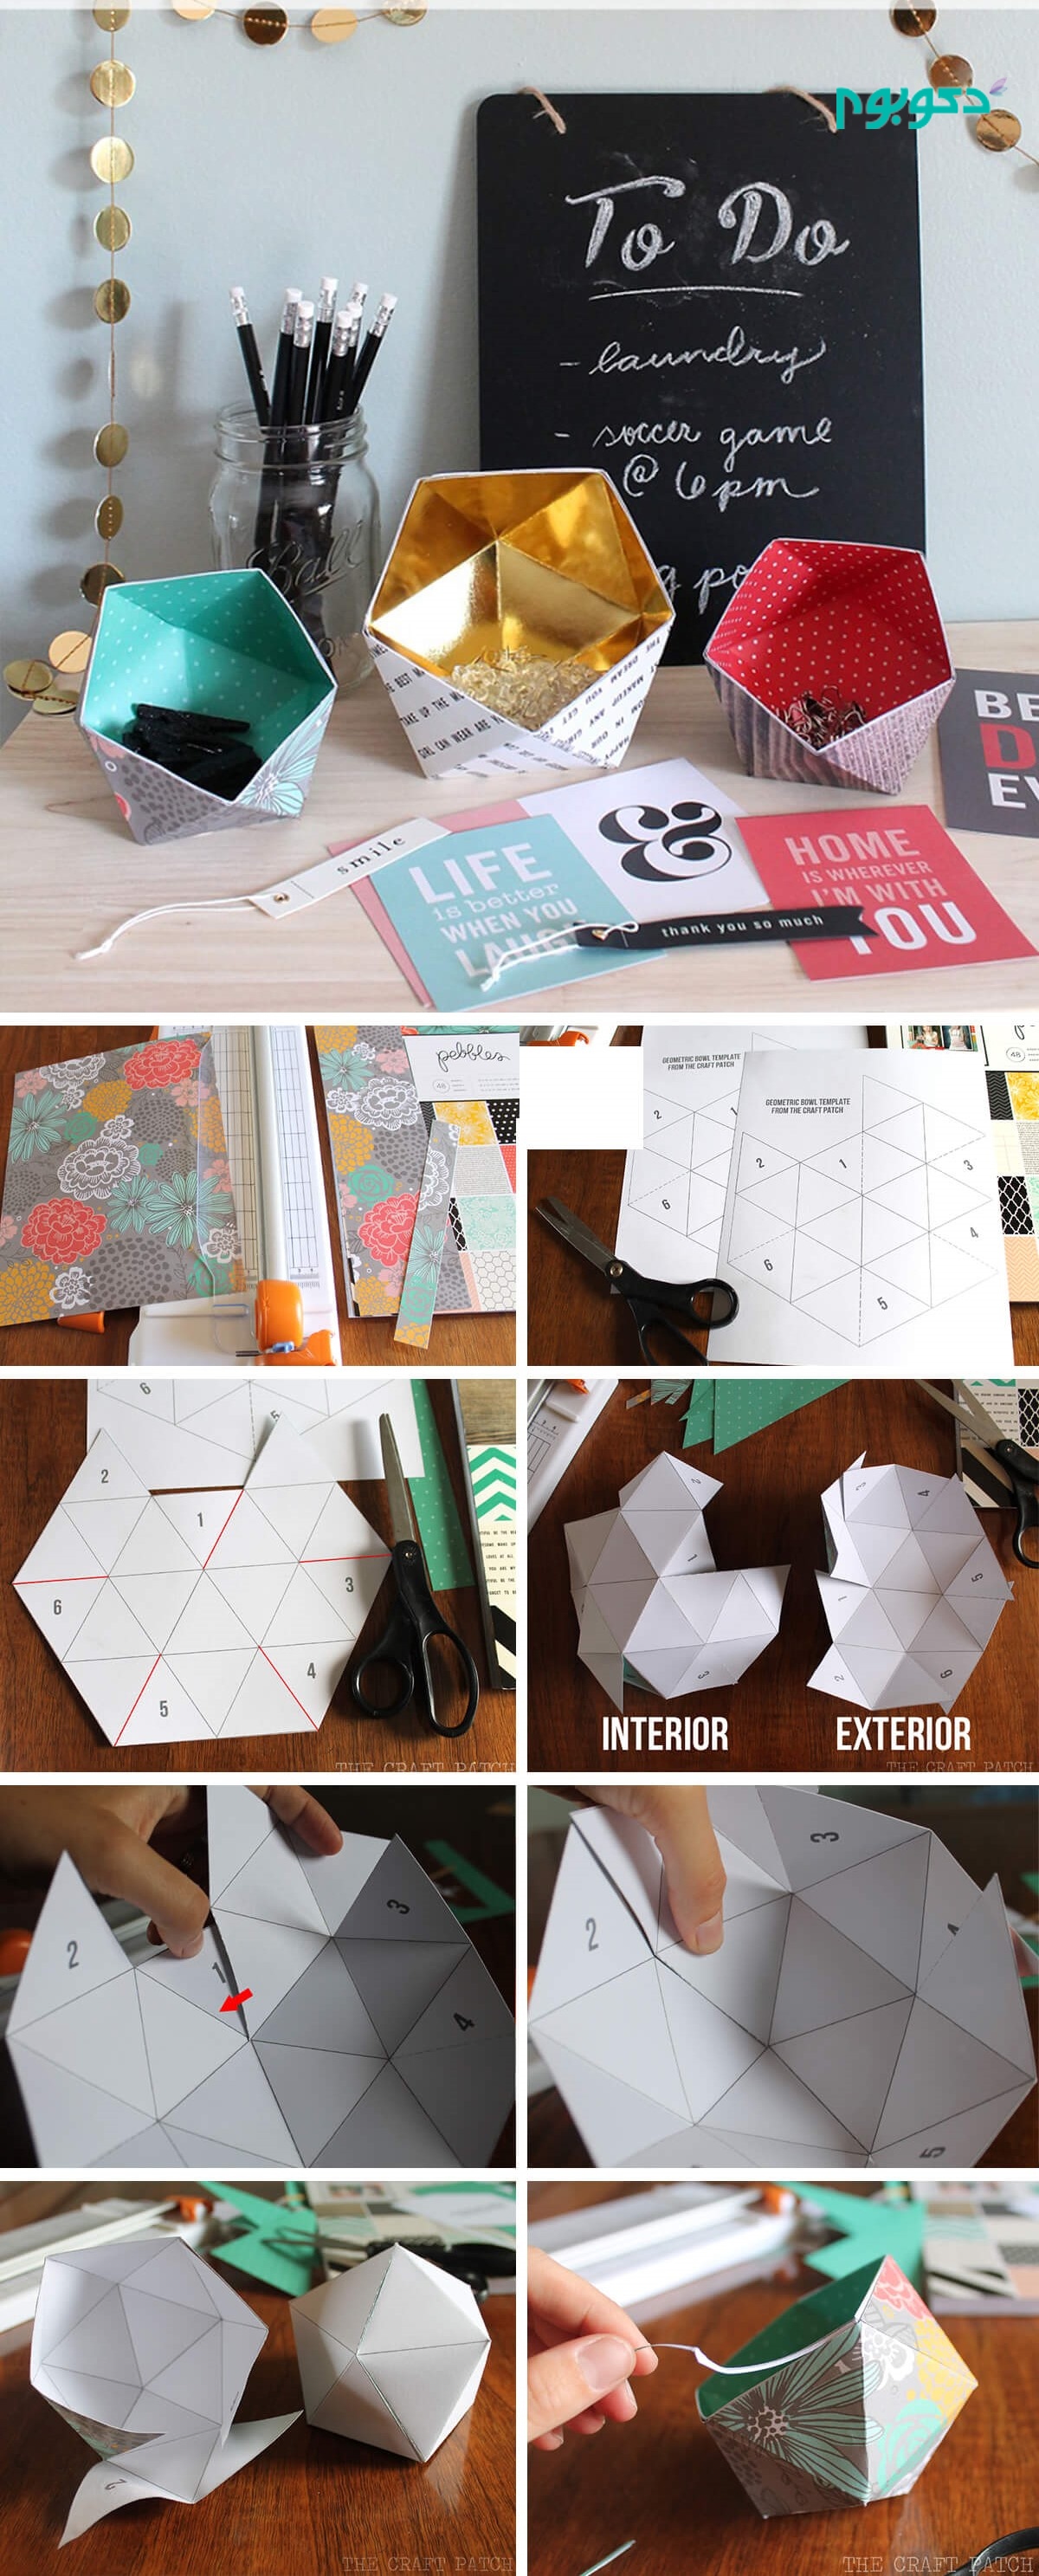 02-paper-decor-crafts-ideas-homebnc.jpg